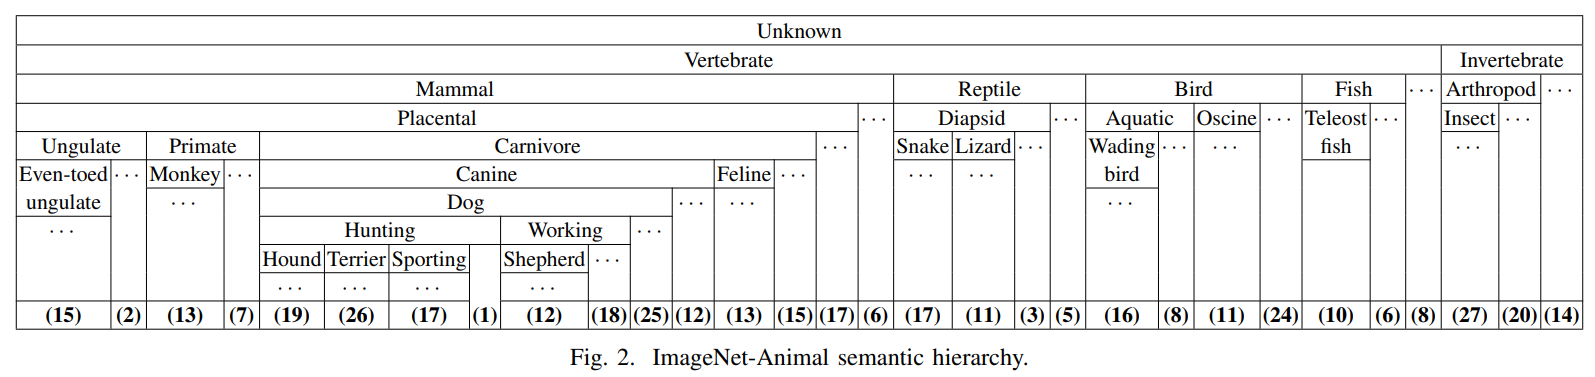 ImageNet Animal Hierarchy